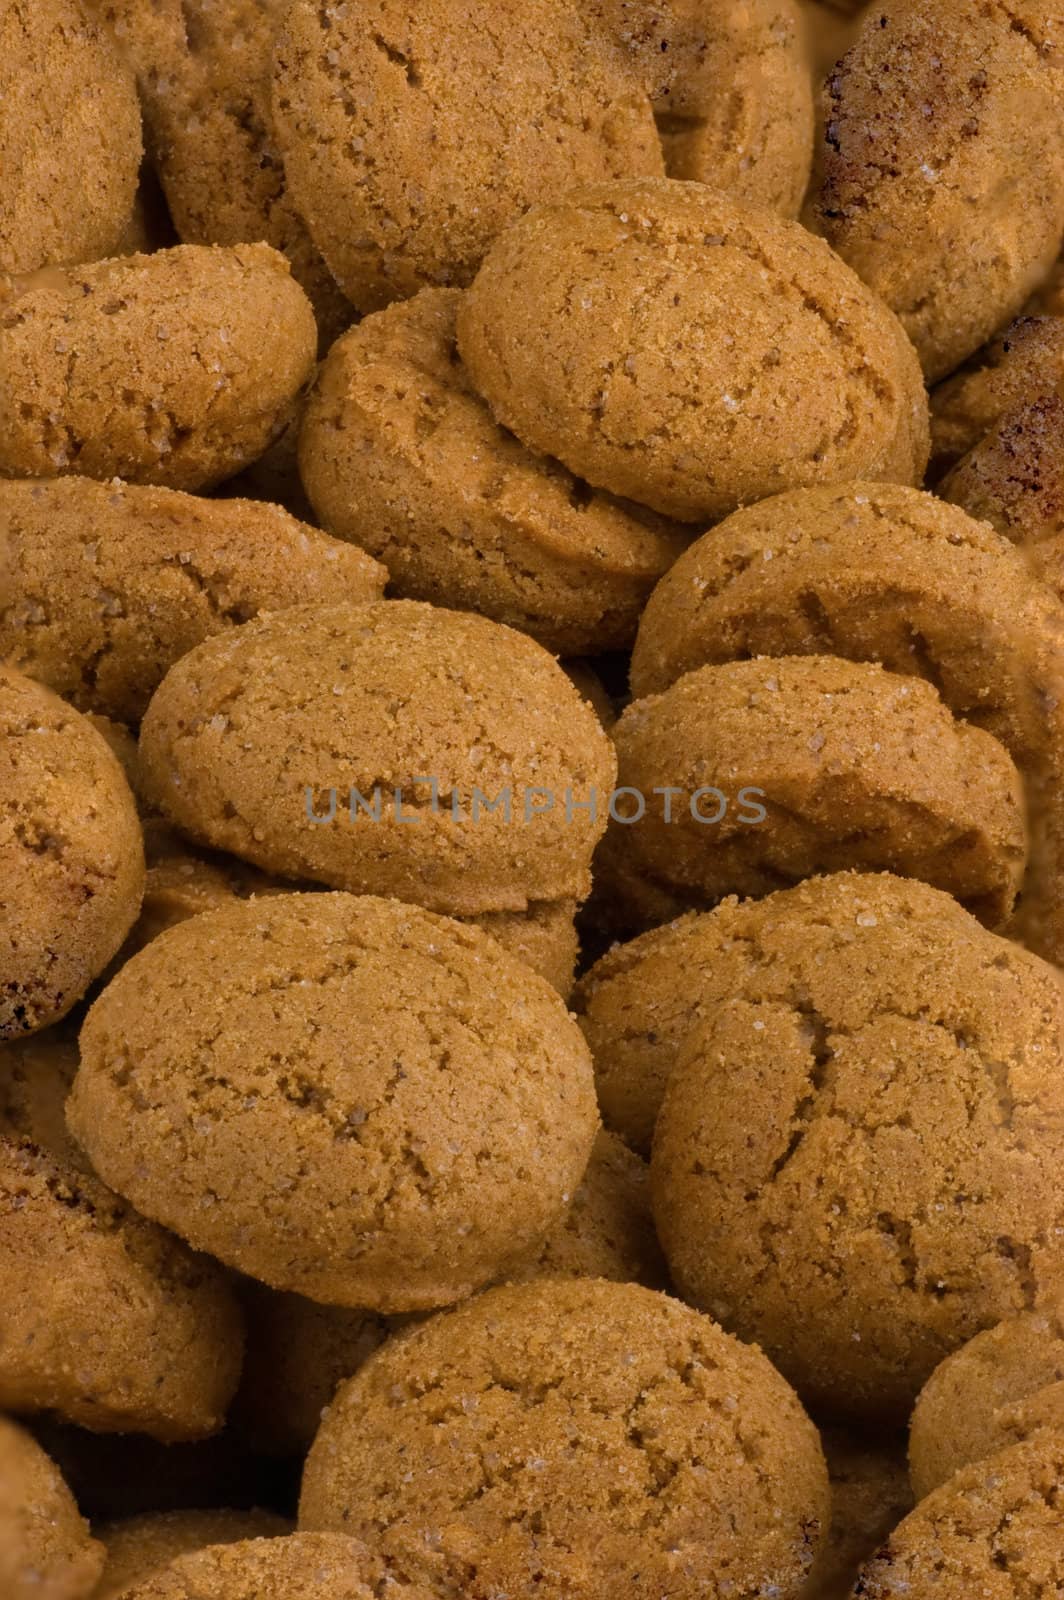 Pepernoten (gingernuts) Dutch biscuits specialty for Sinterklaas holliday on 5 december